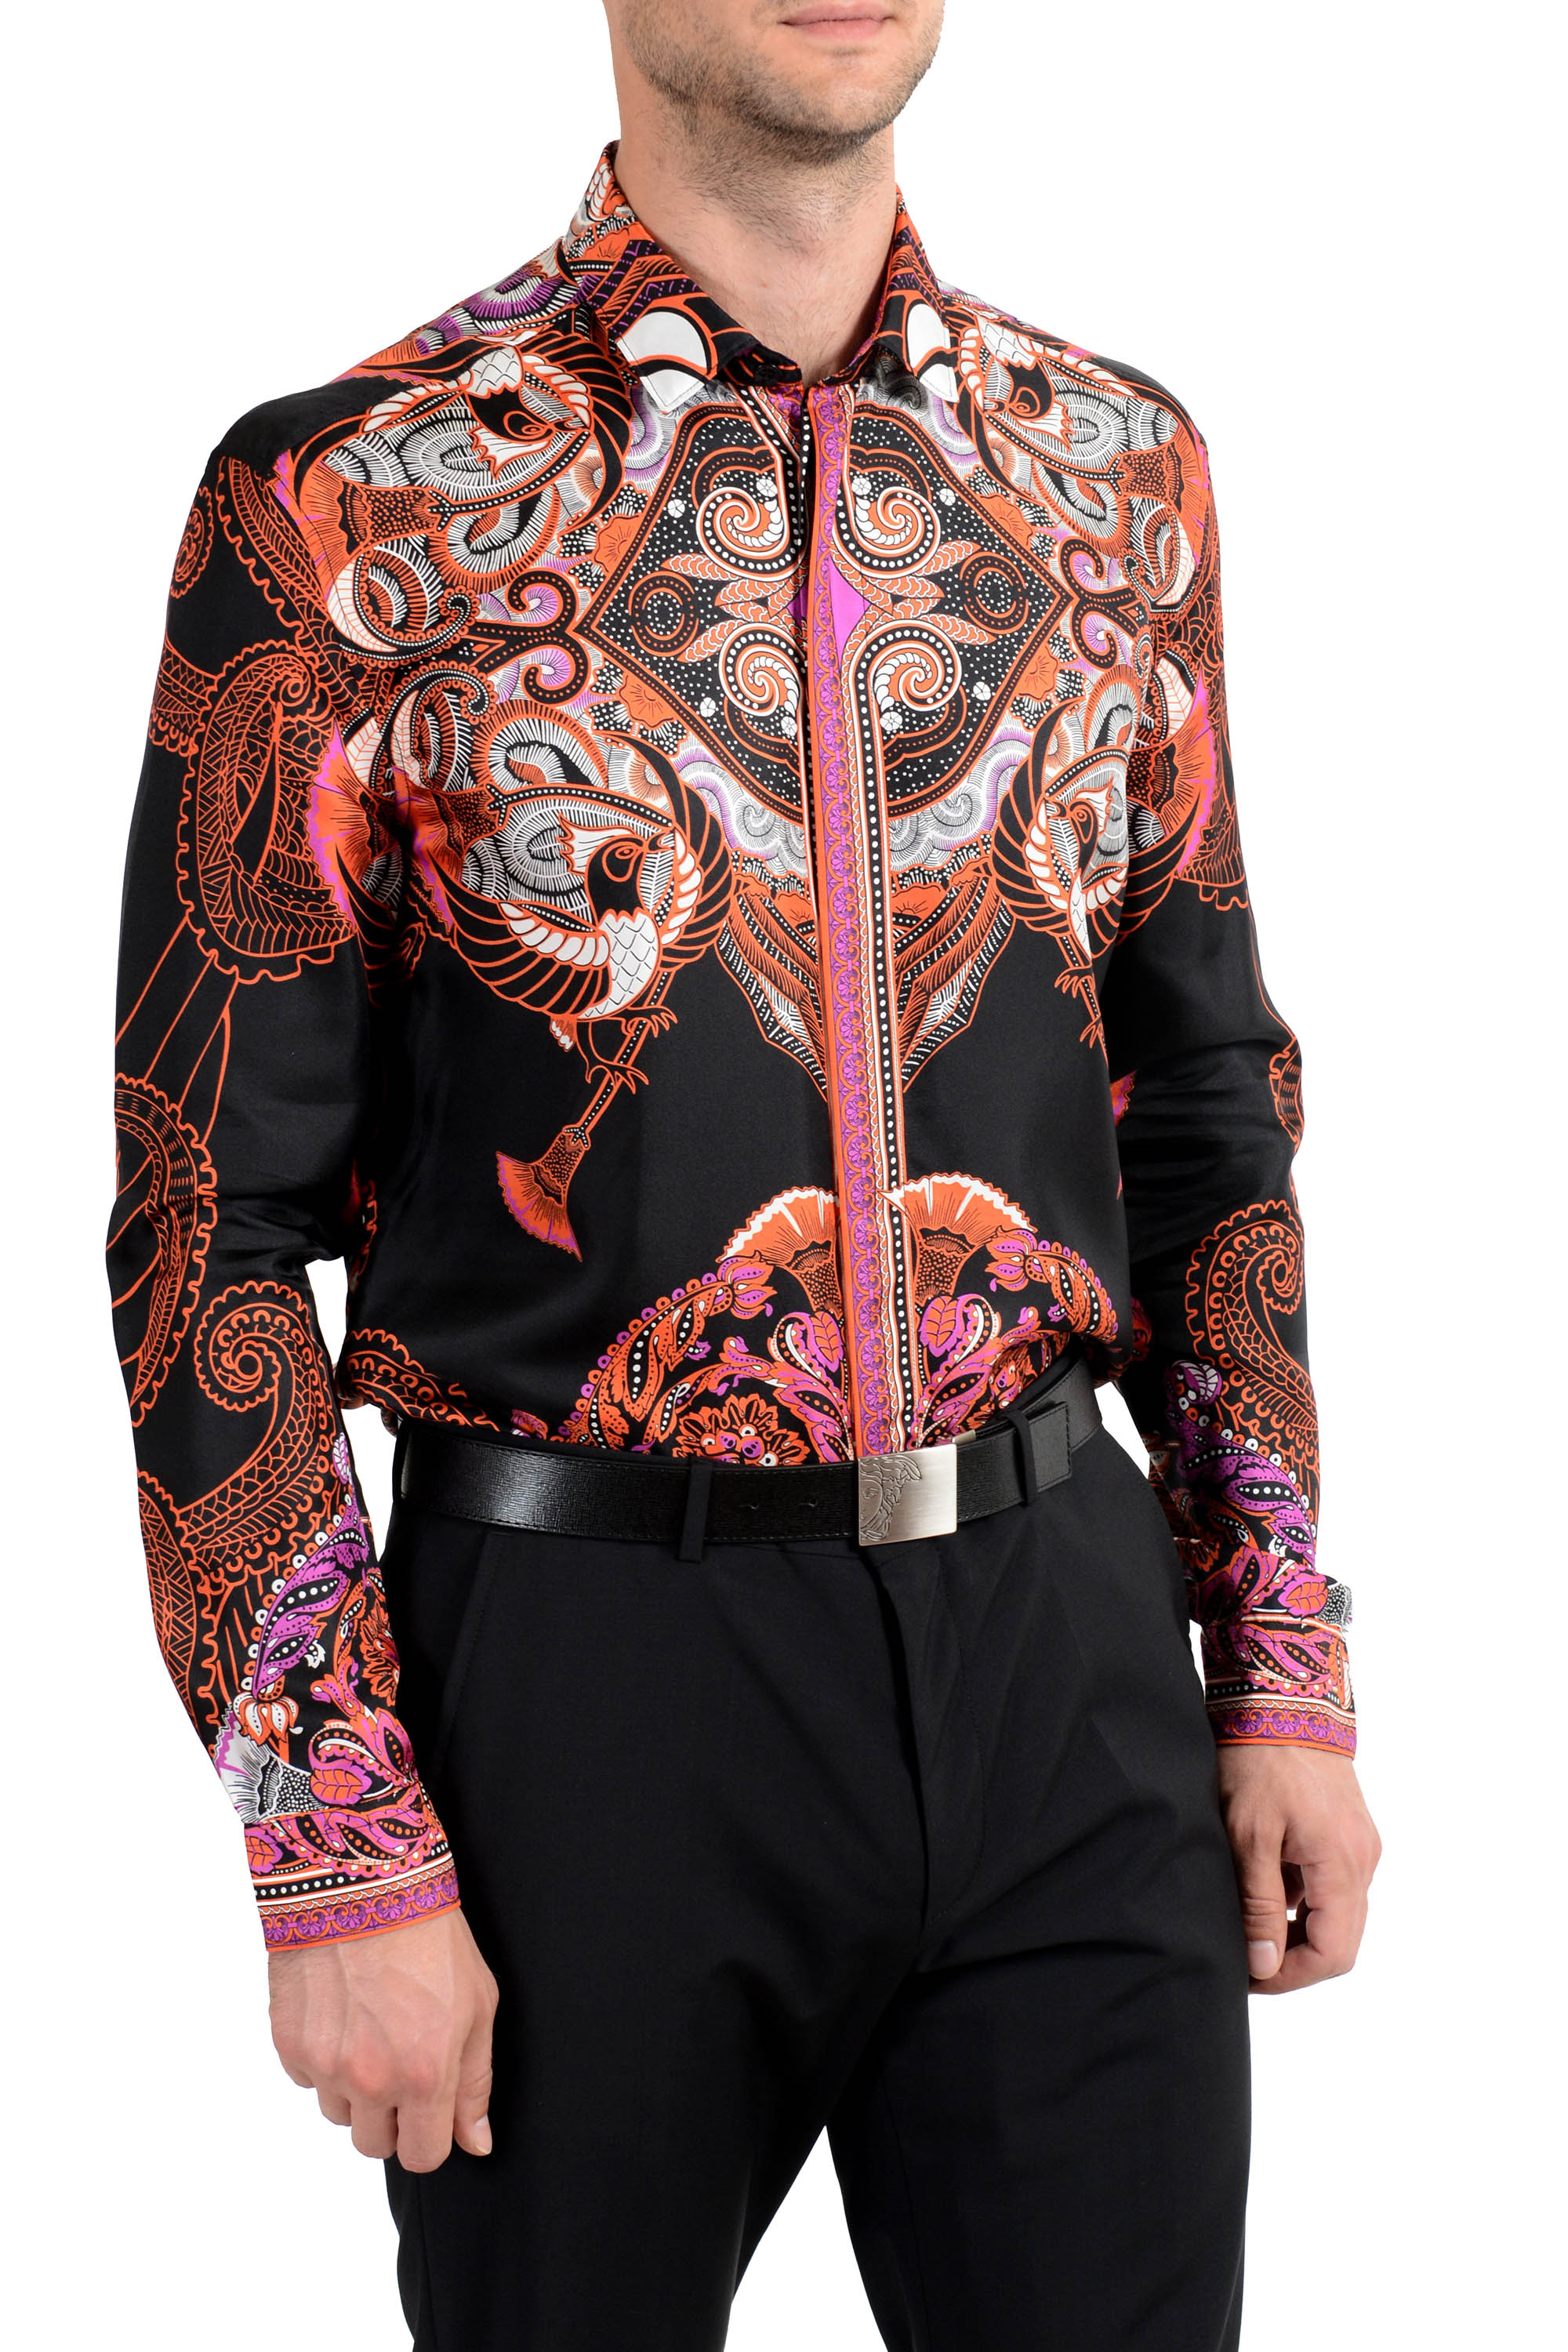 Versace Collection "Trend" Men's 100% Silk Graphic Long Dress Shirt